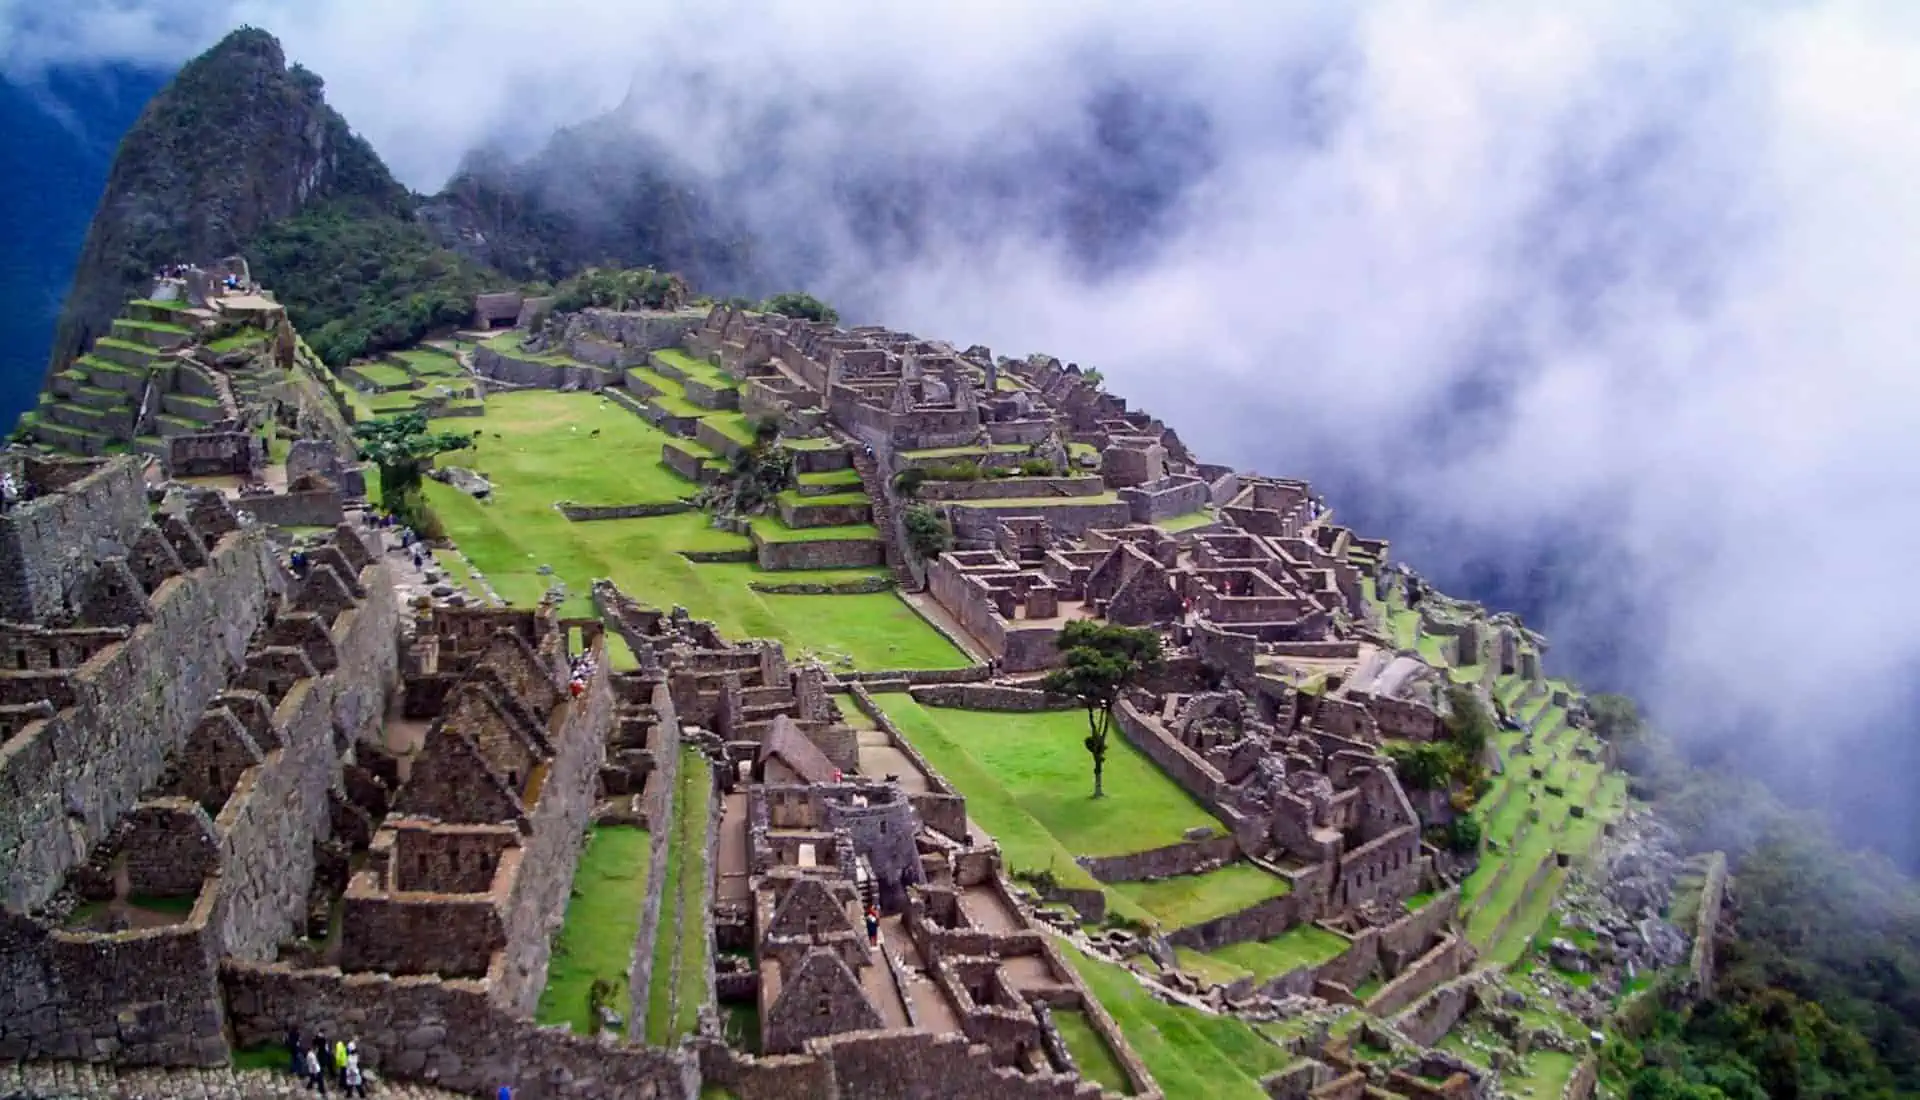 Epic Adventures - Mist drifts around mountaintop Macchu Picchu ruins.